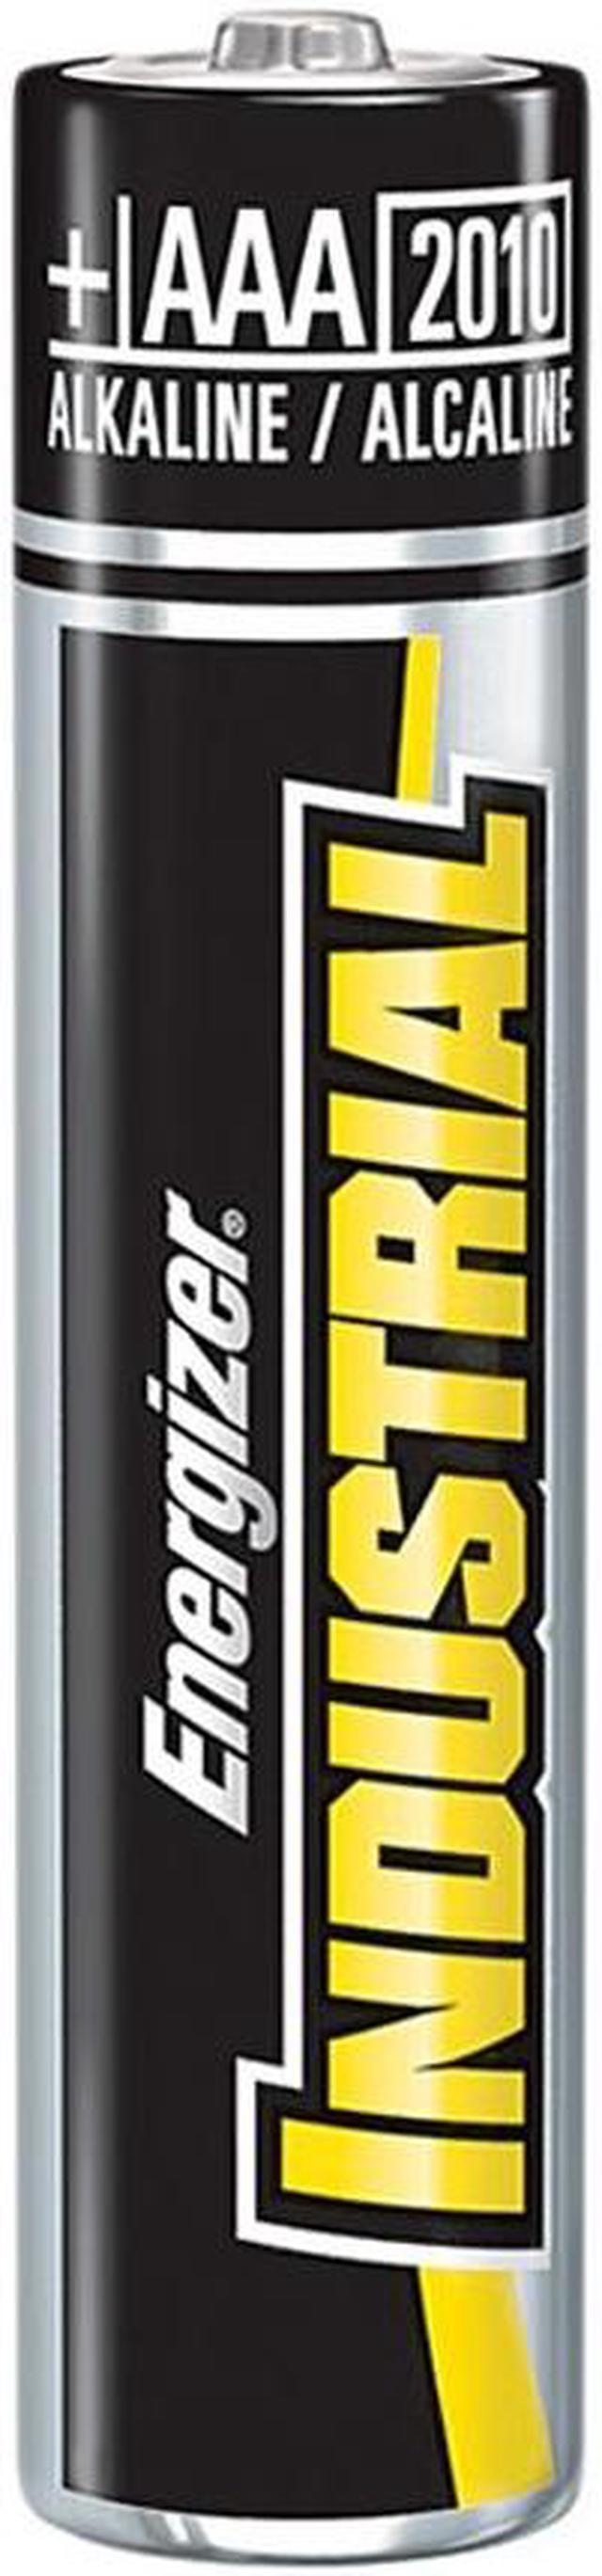 Energizer Industrial AAA Alkaline Battery 24/Pack (EN92)